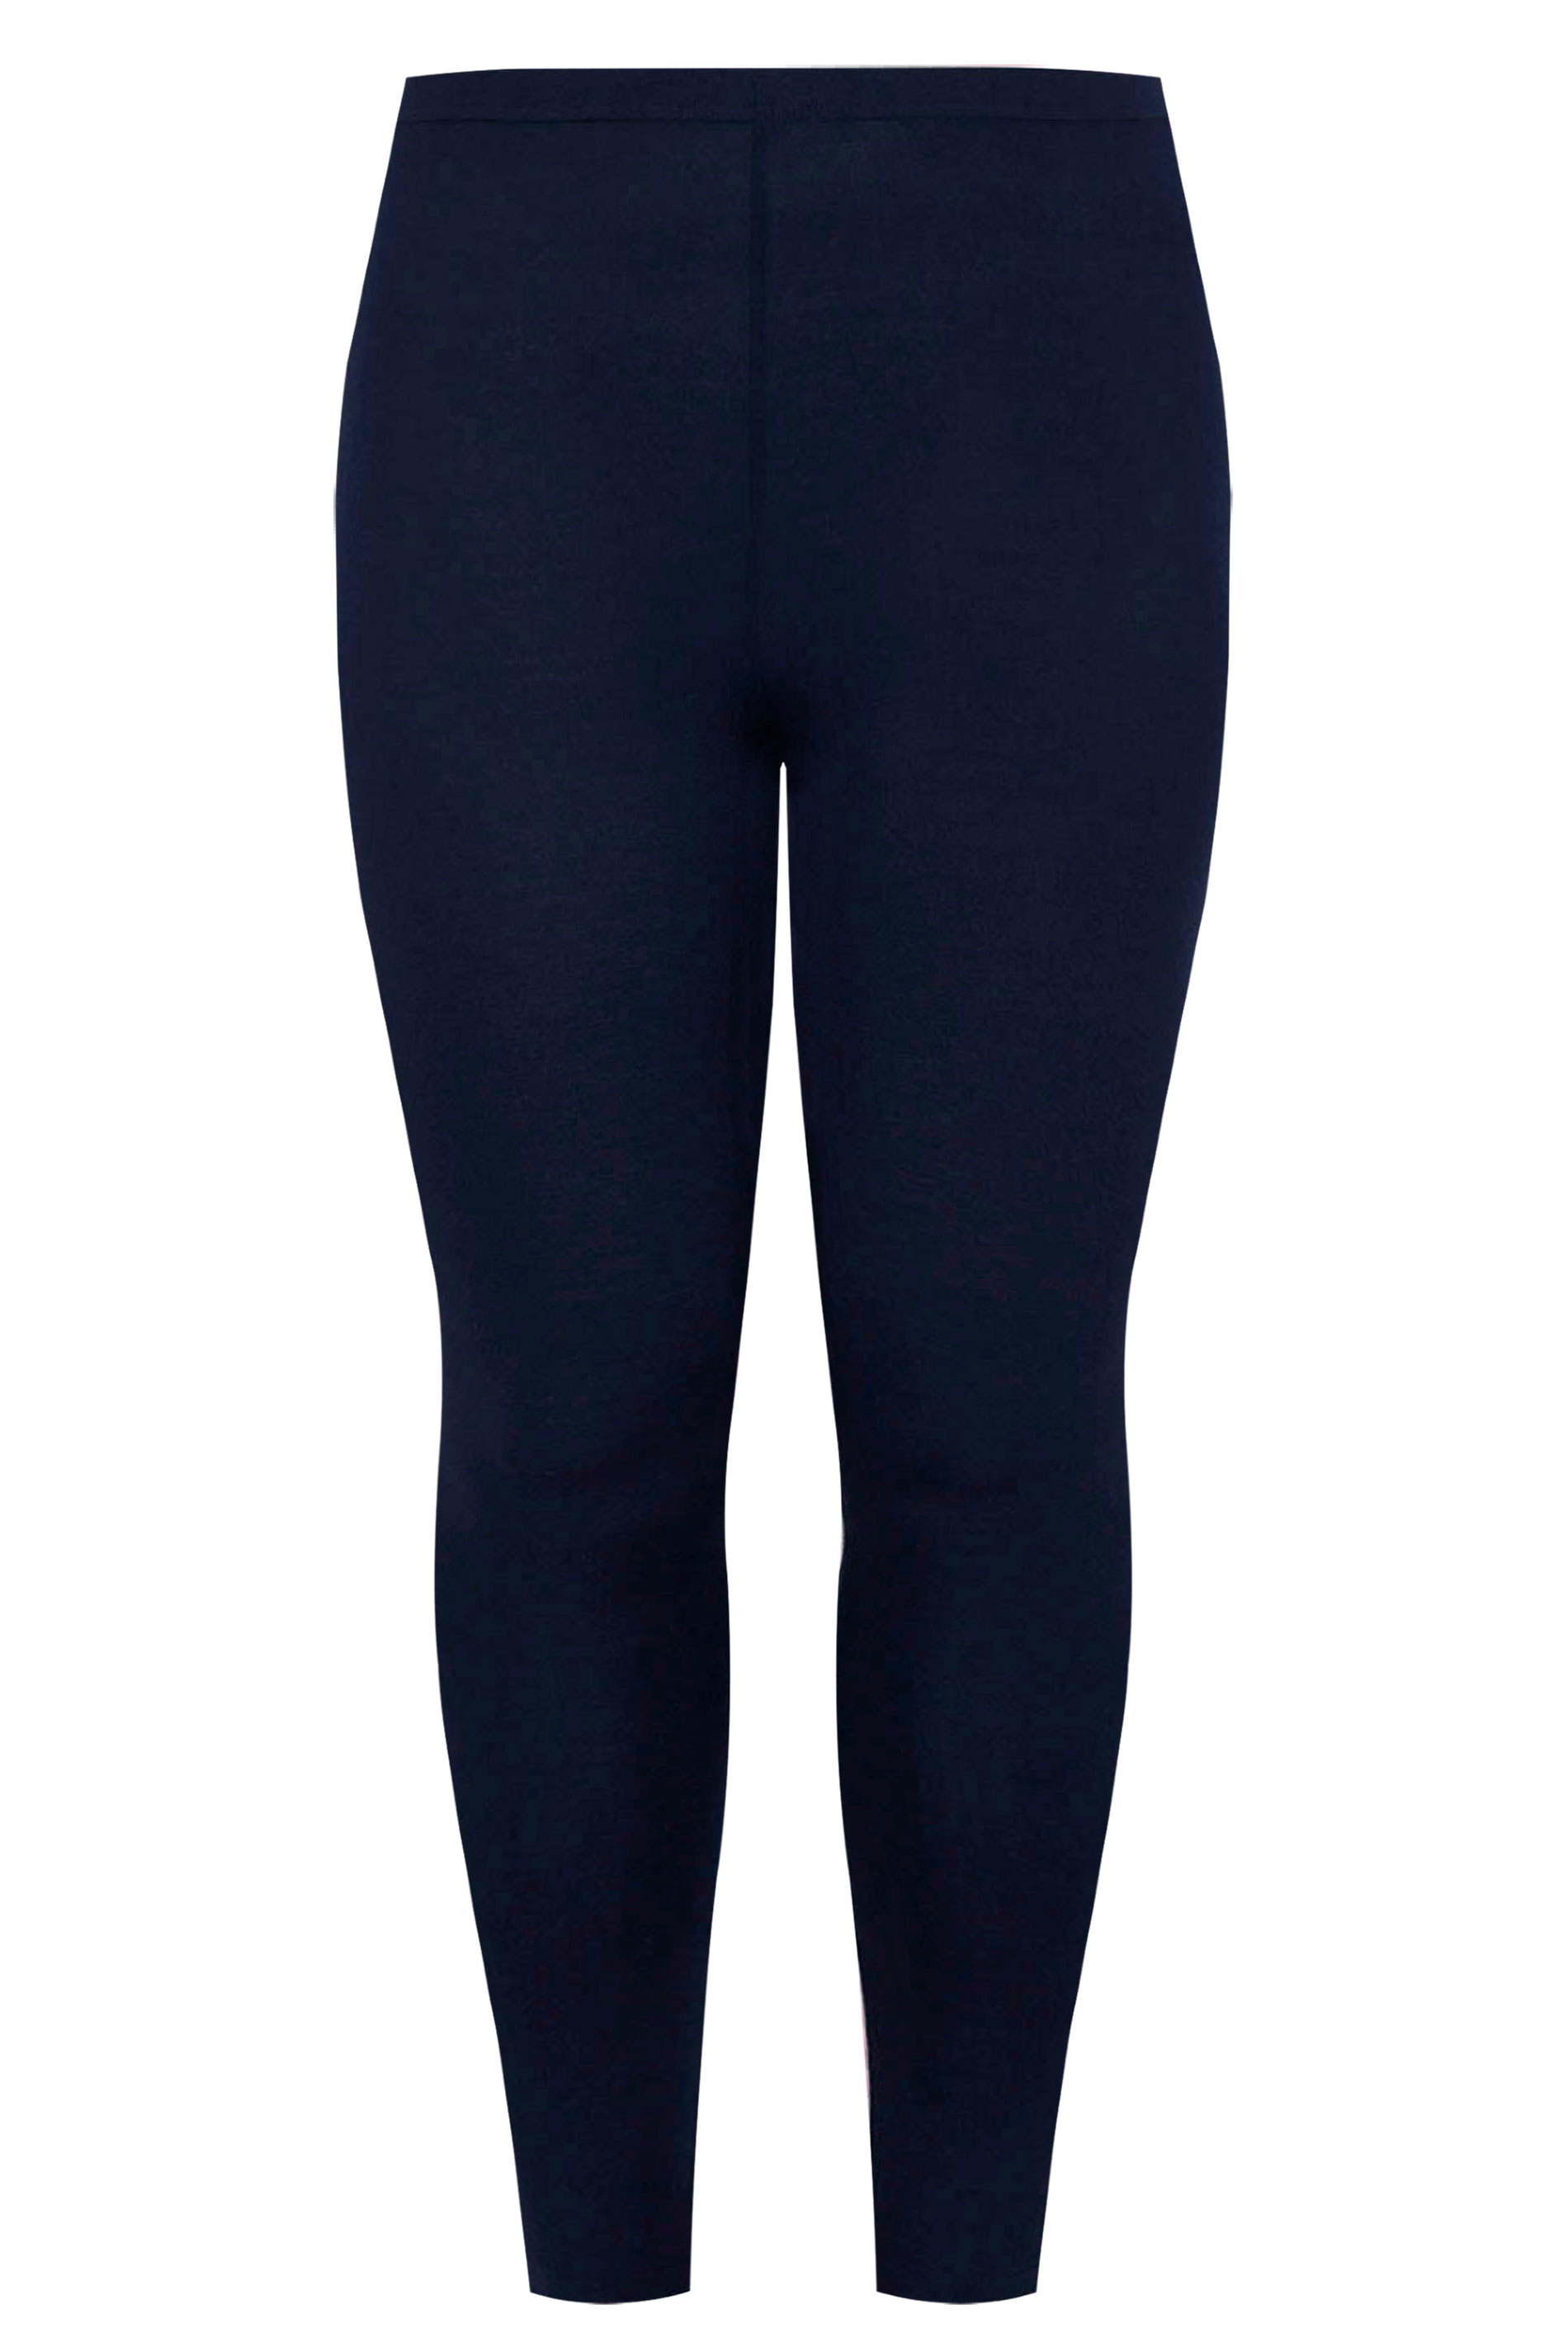 Plus Size Navy Blue Cotton Leggings | Yours Clothing